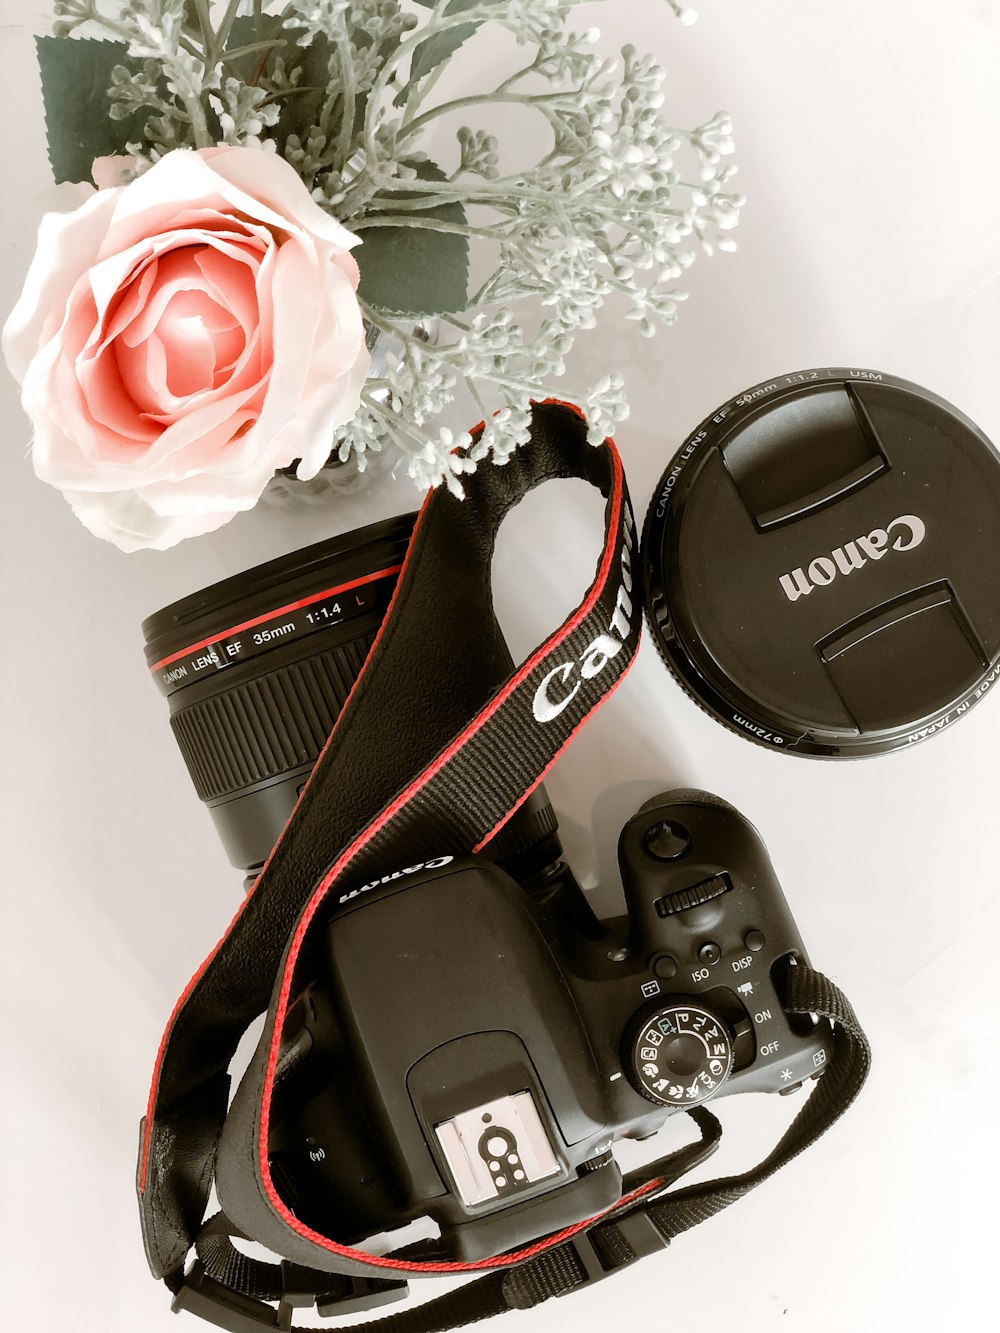 black and red nikon dslr camera on white floral textile